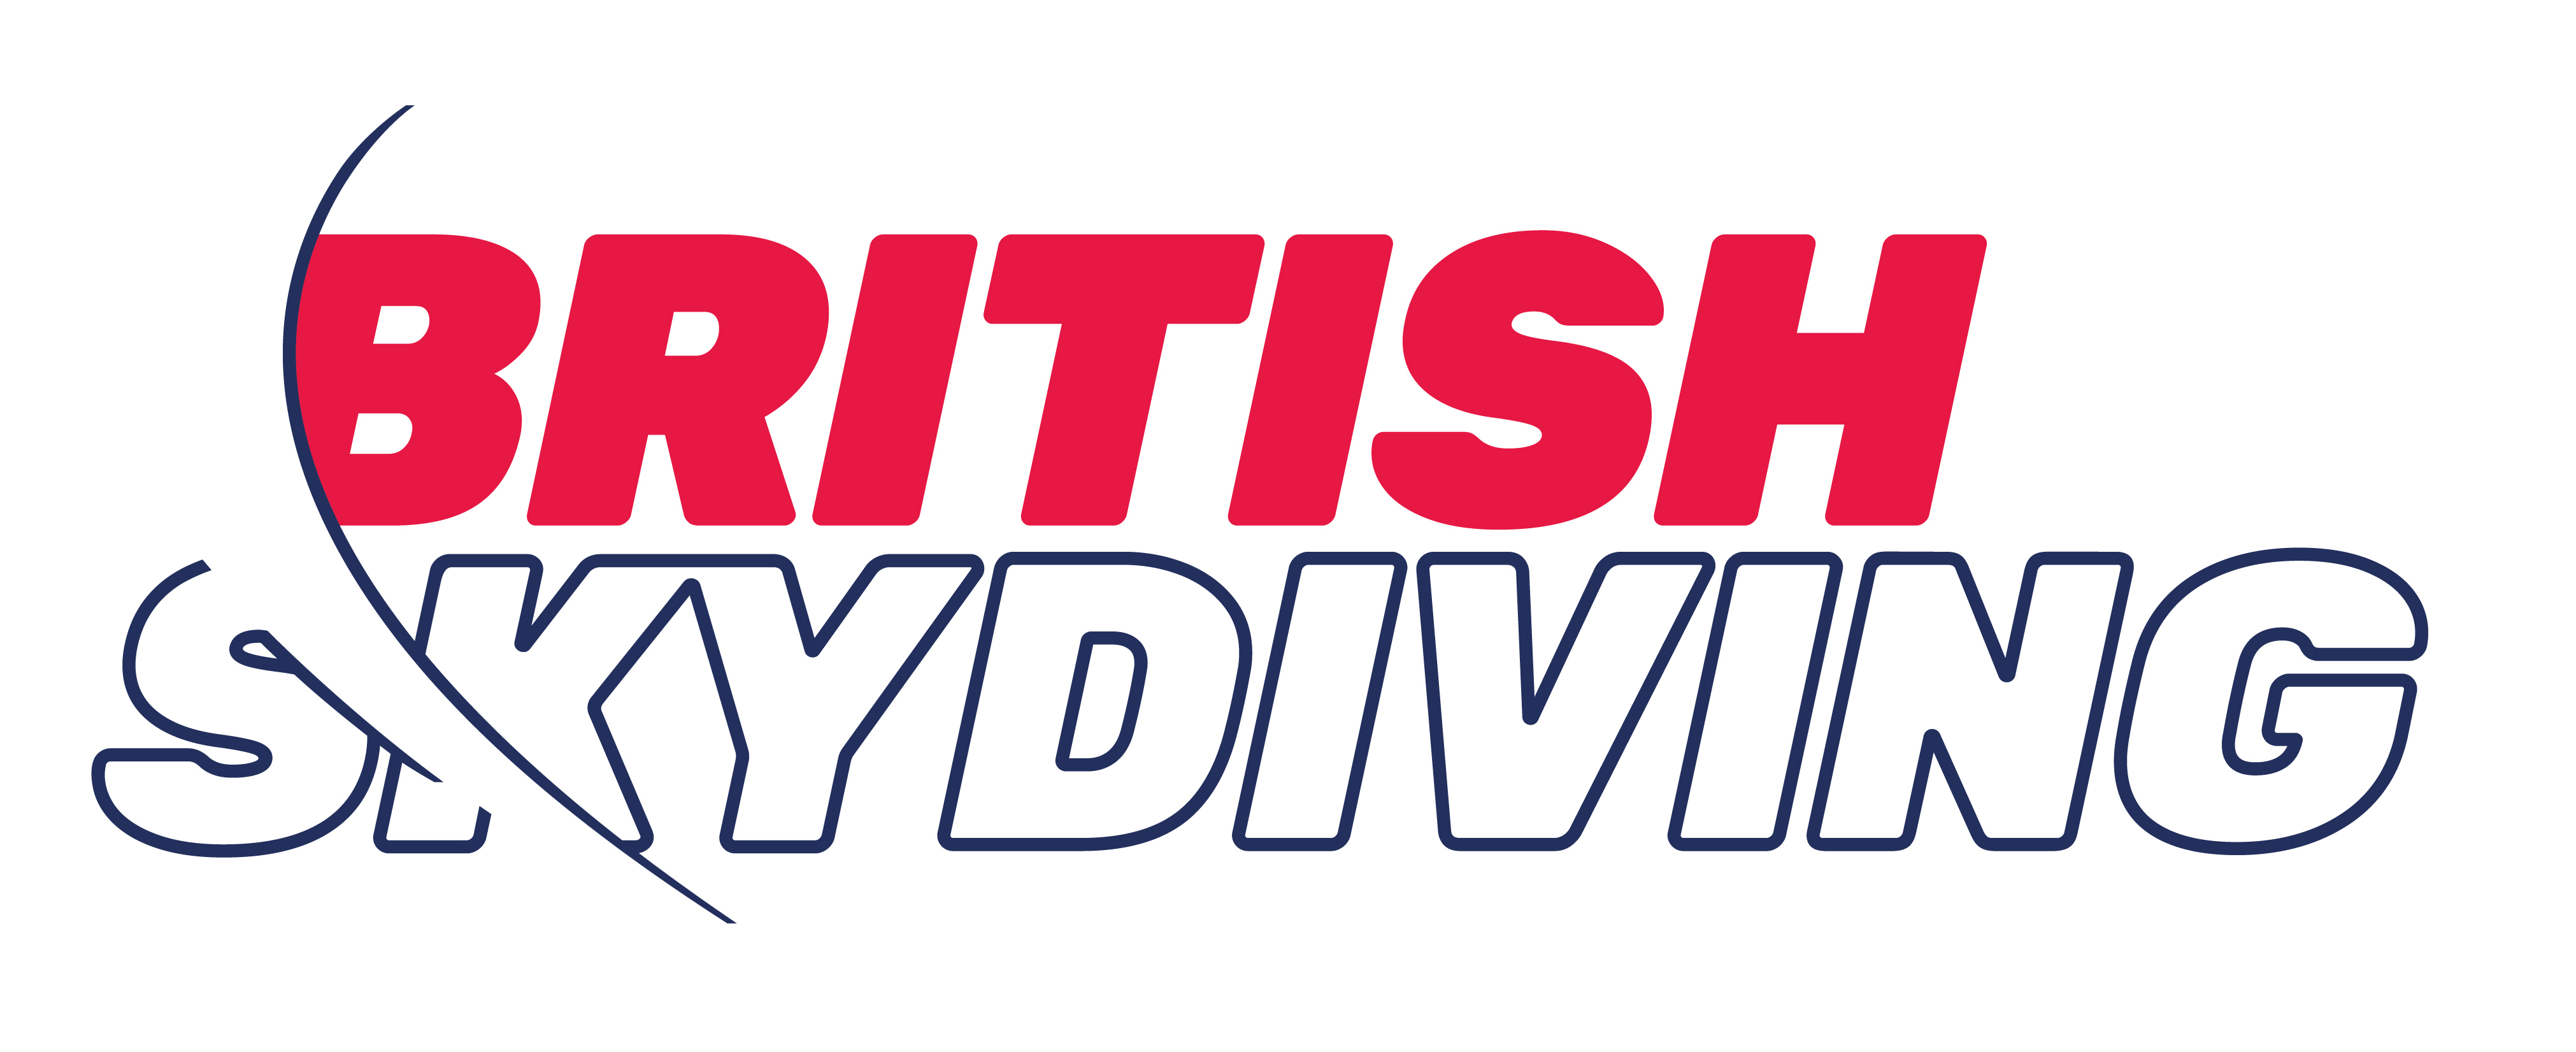 British skydiving logo colour rgb